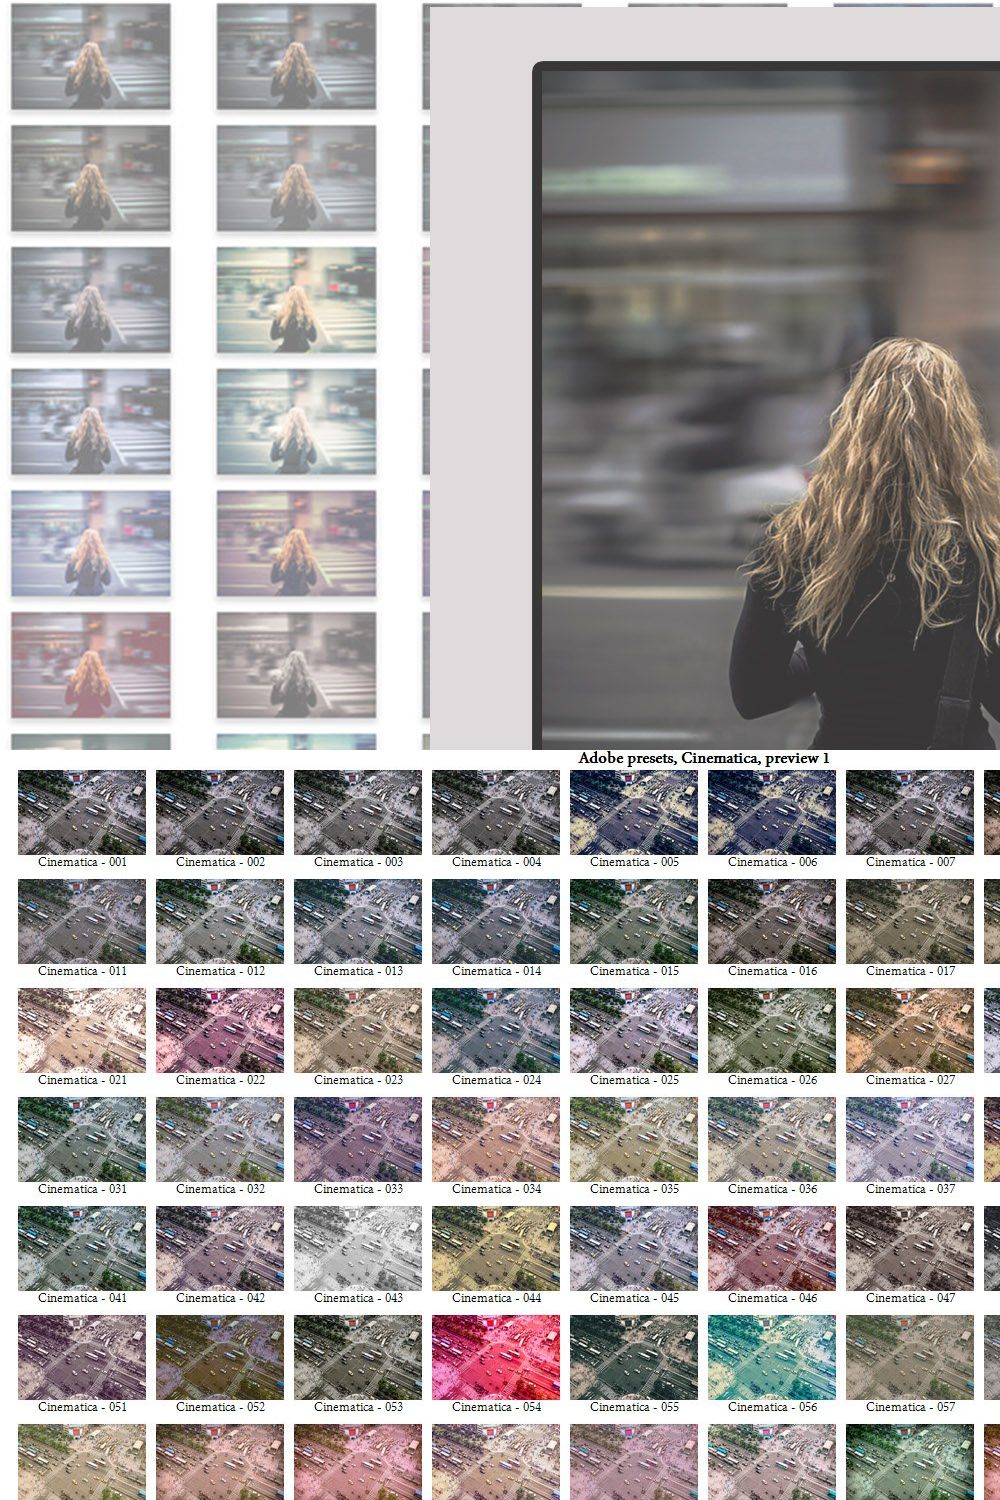 Cinematica Adobe presets pinterest preview image.